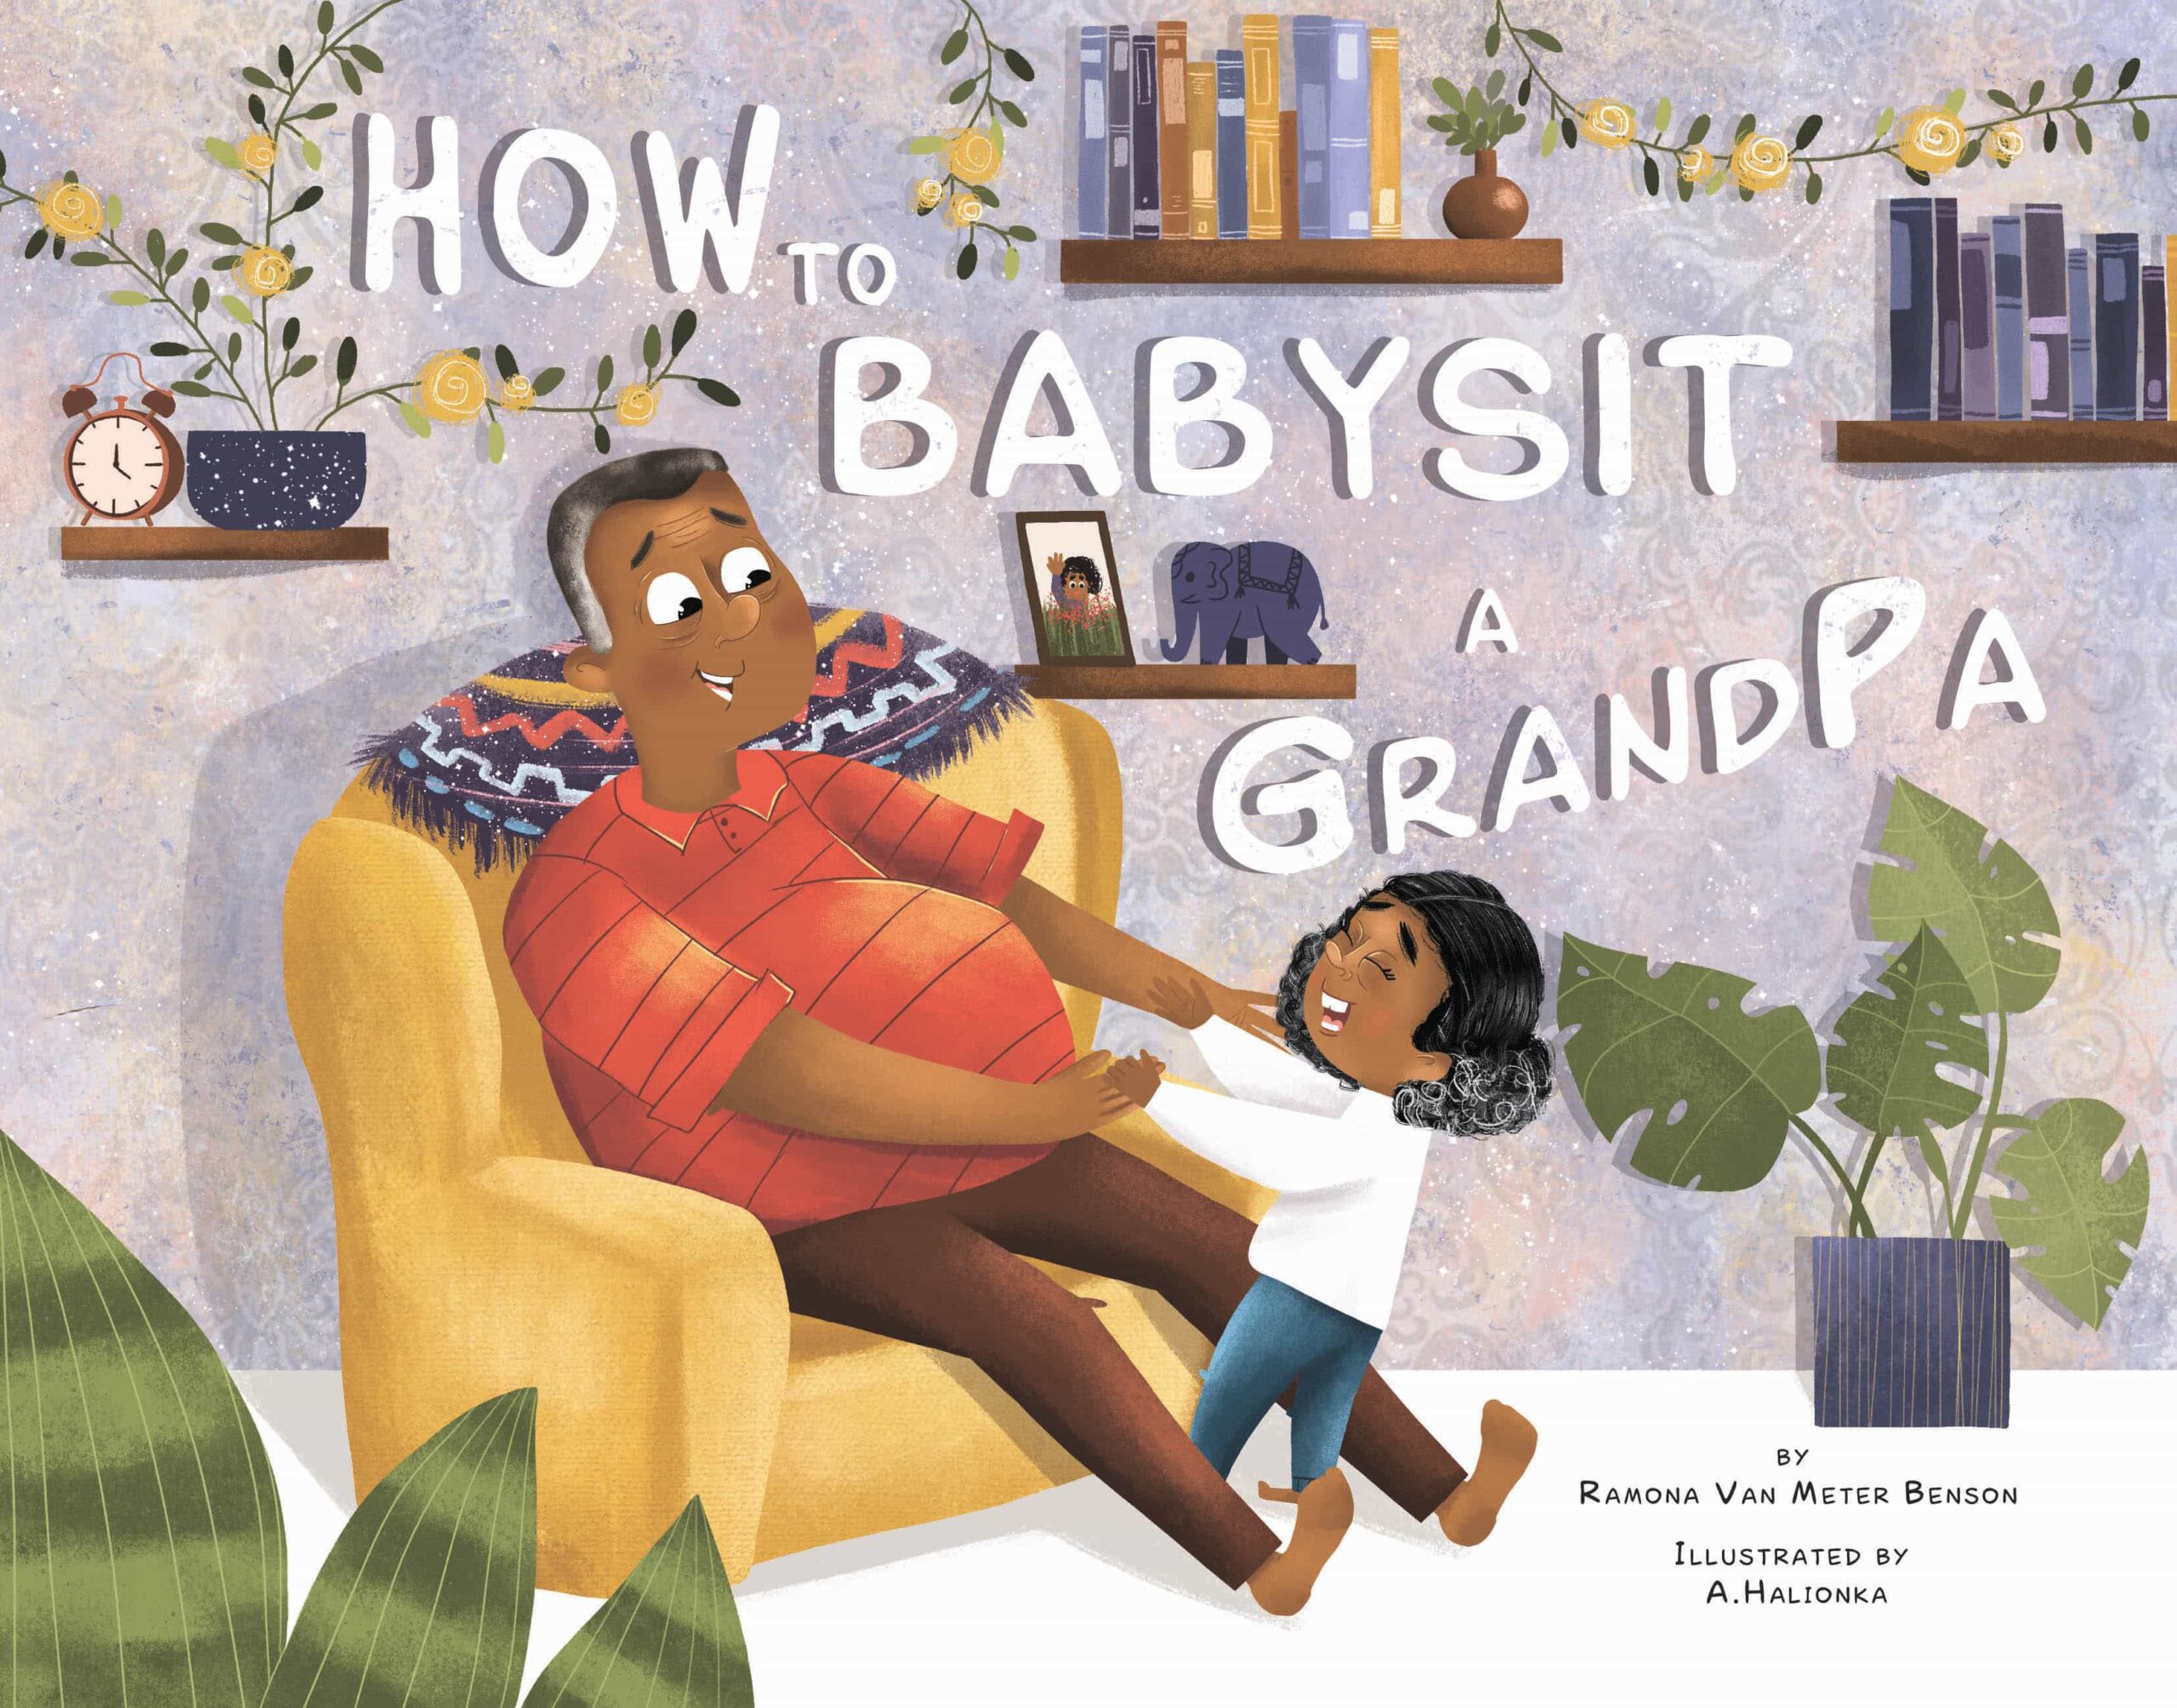 Children's book "How to babysit a GrandPa"